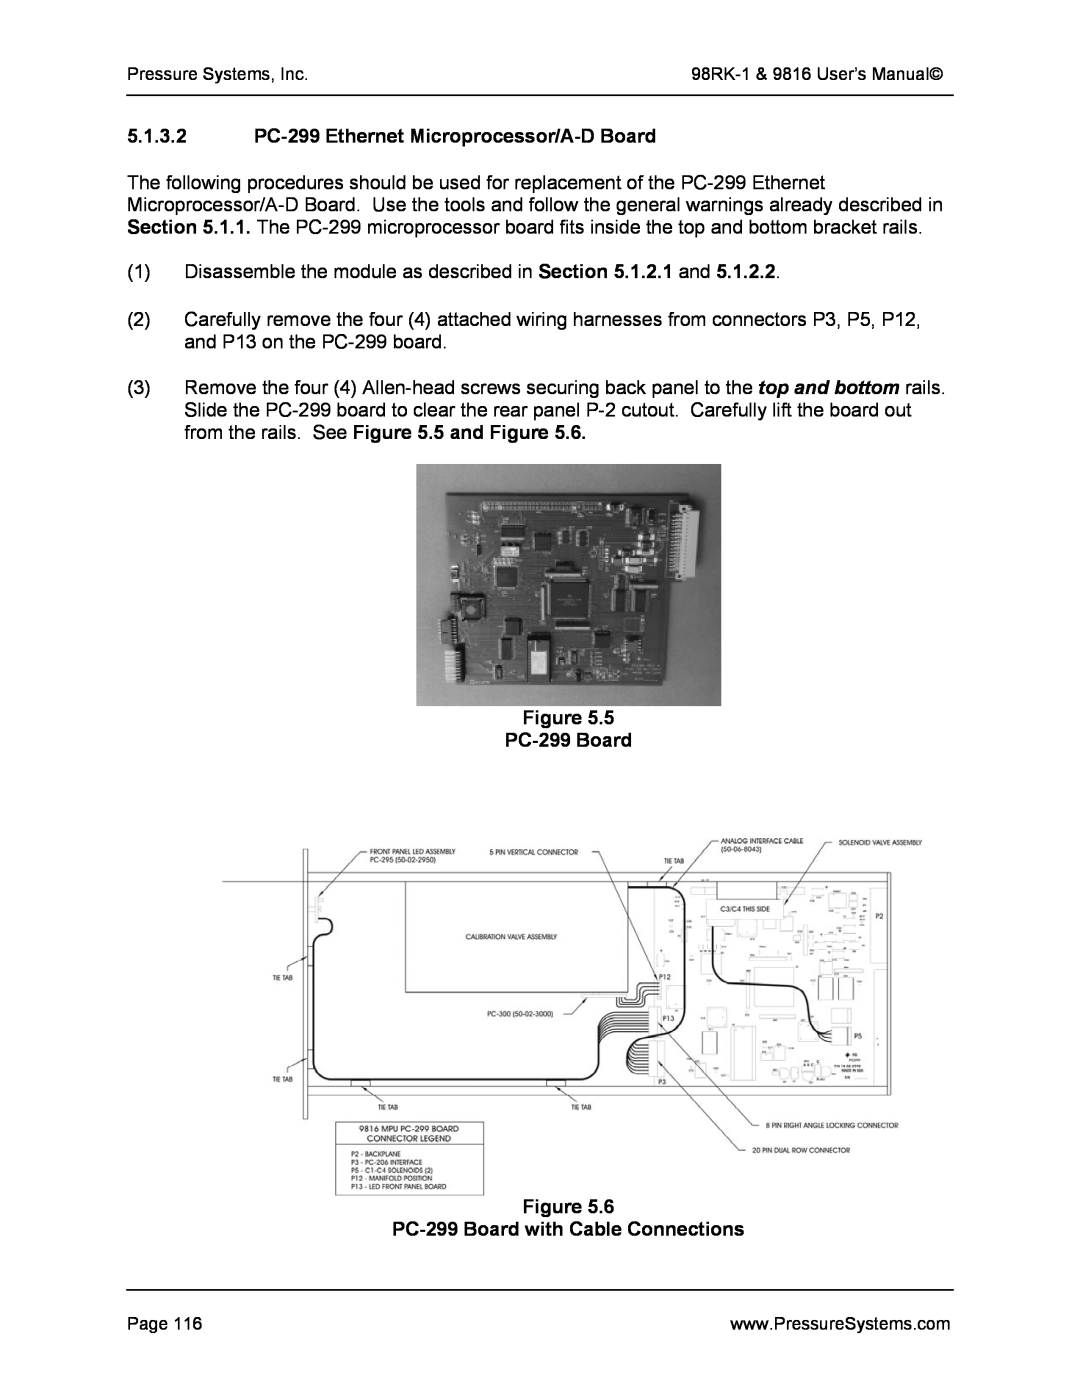 Pressure Systems 98RK-1 user manual 5.1.3.2 PC-299 Ethernet Microprocessor/A-D Board, PC-299 Board 